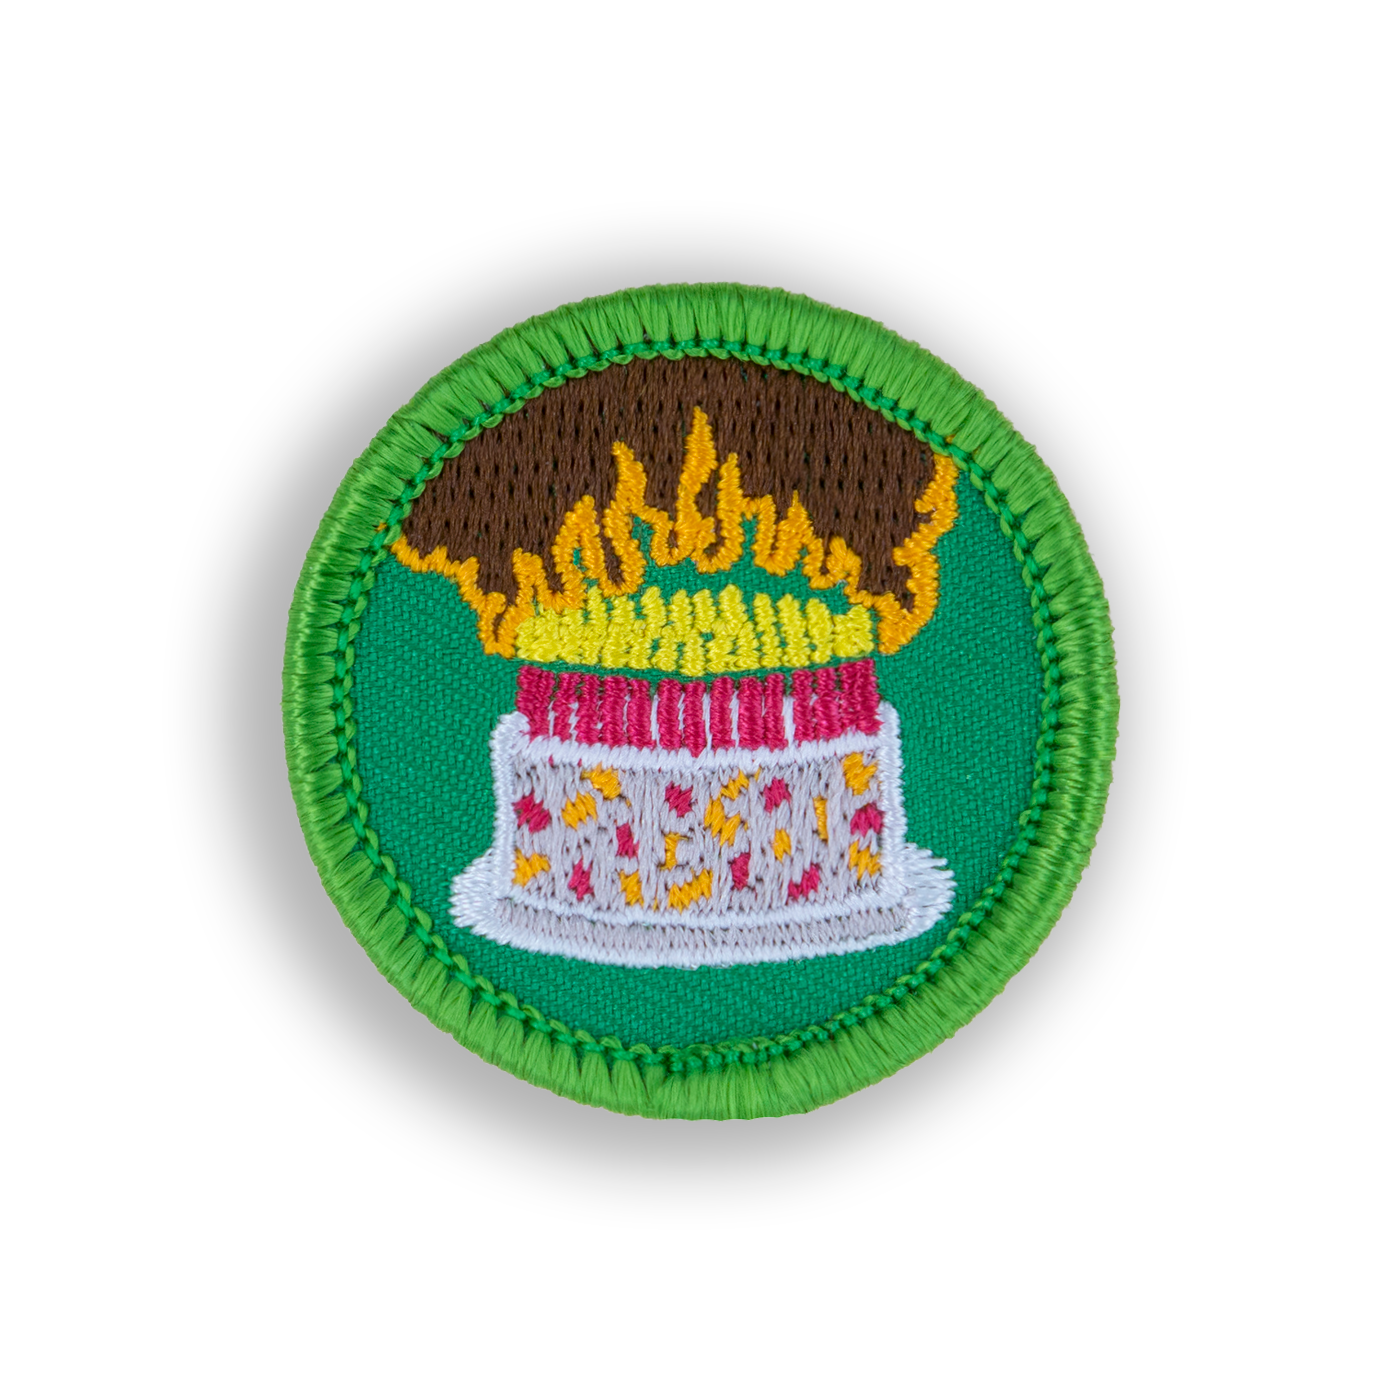 Birthday Bonfire Patch - Demerit Wear - Fake Merit Badges